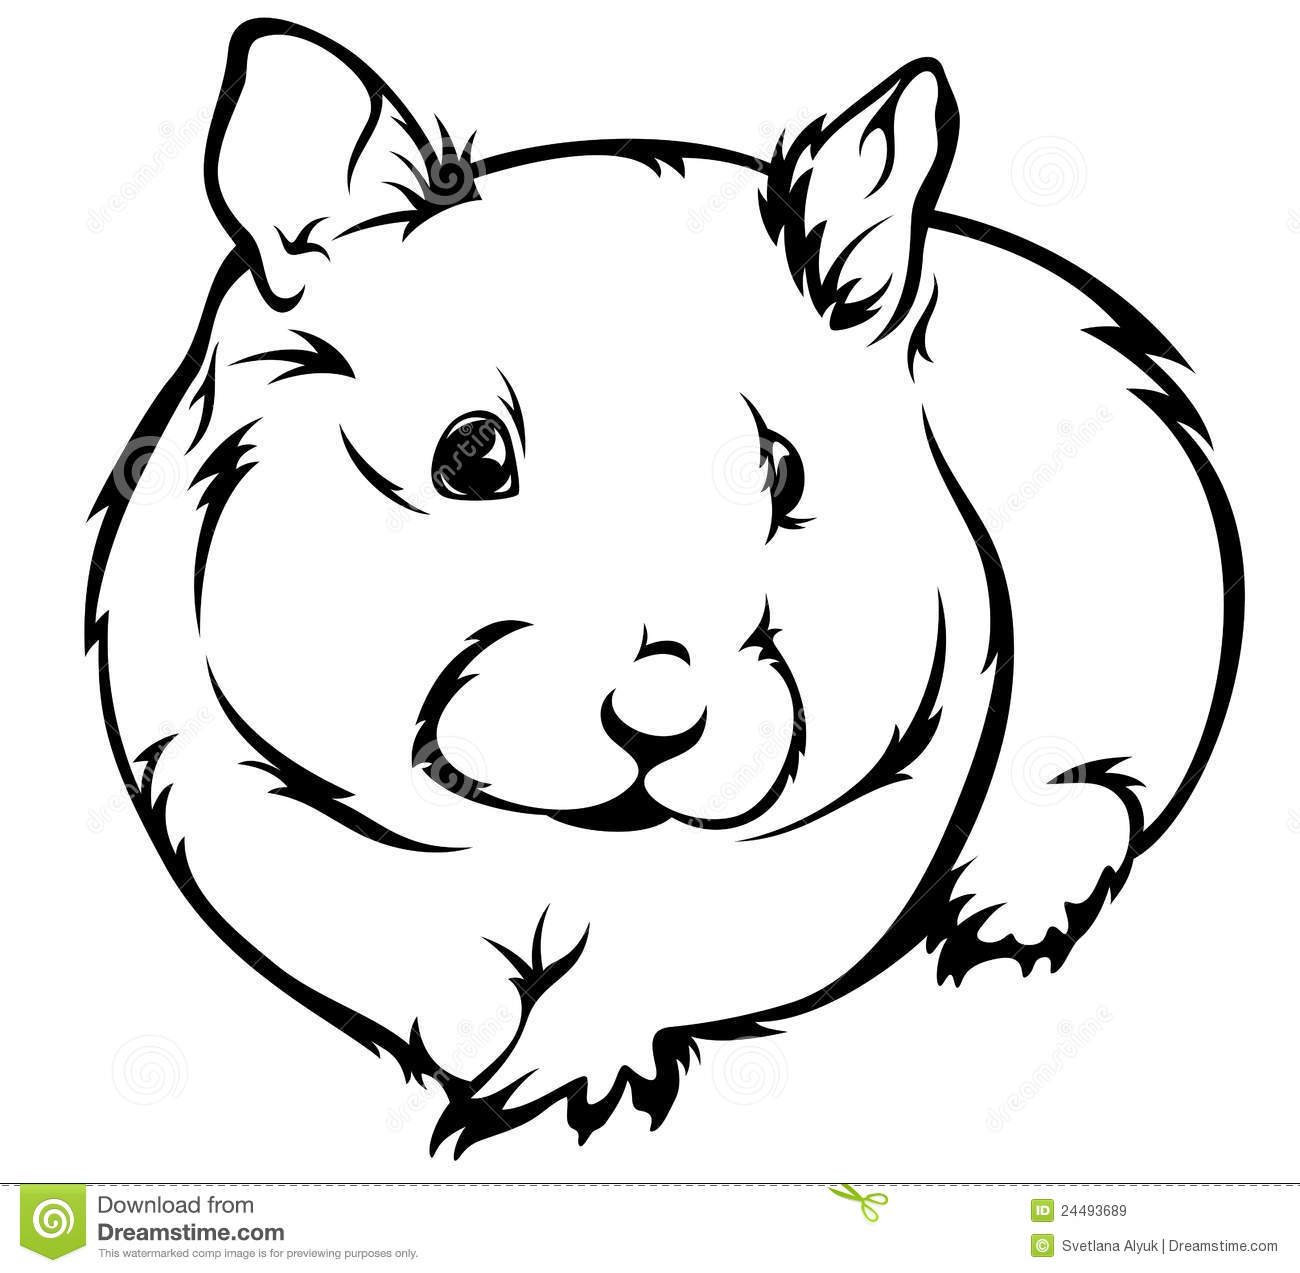 Cute Hamster  Cricetus  Illustration   Black And White Outline